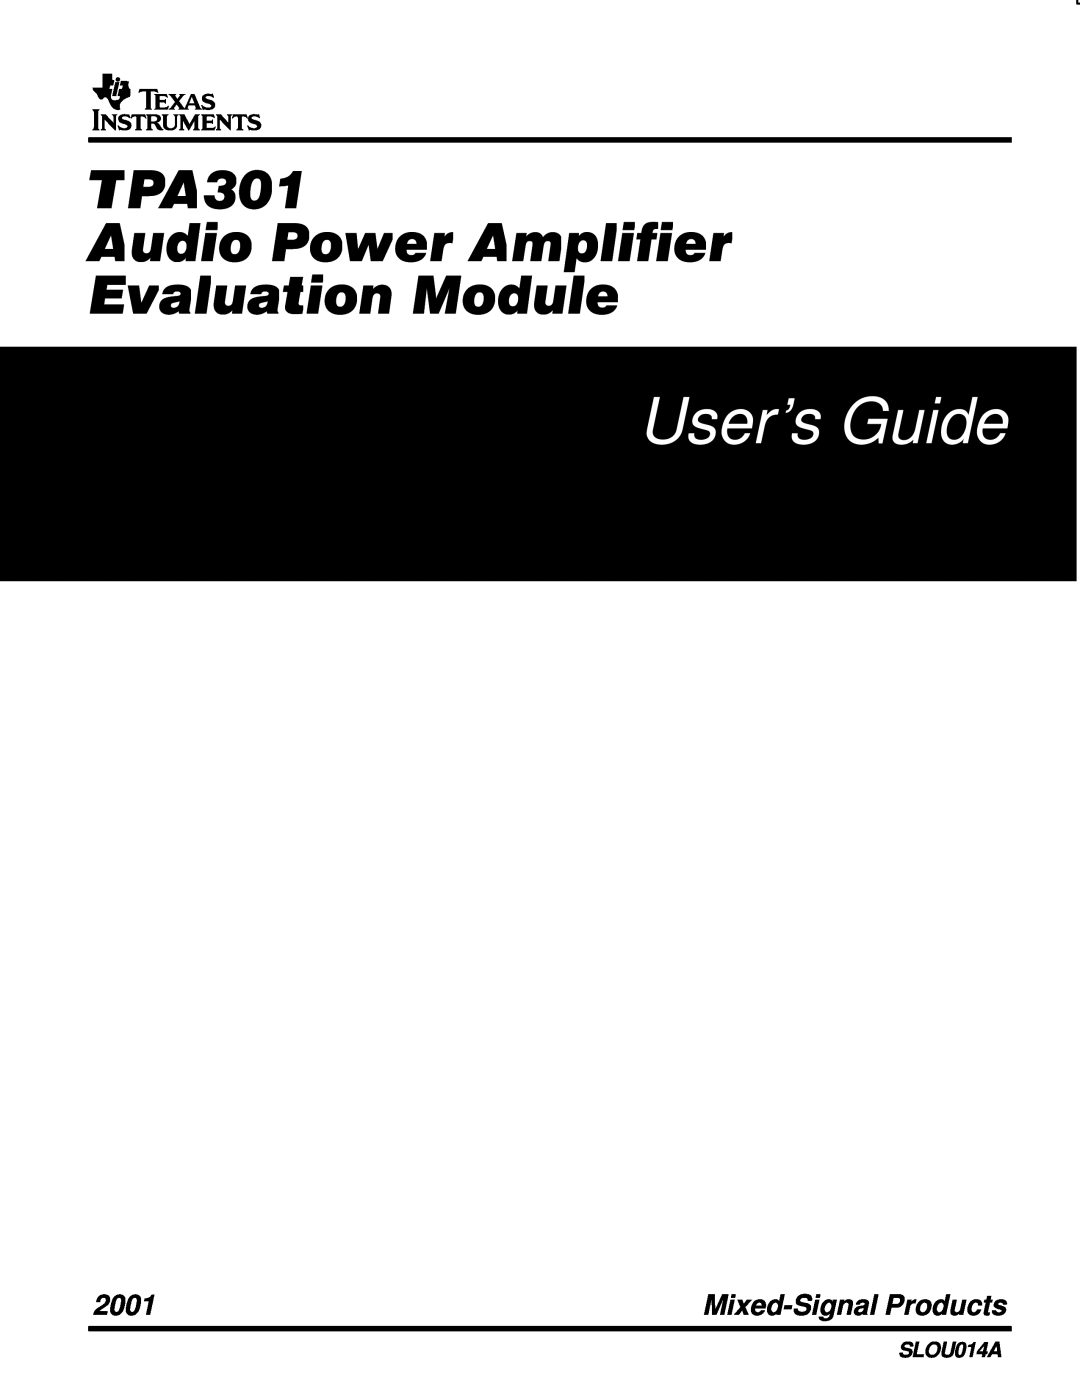 Texas Instruments TPA301 manual User’s Guide, ETPA3Avudaluio01ationPowerModuleAmplifier, 2001, Mixed-SignalProducts 